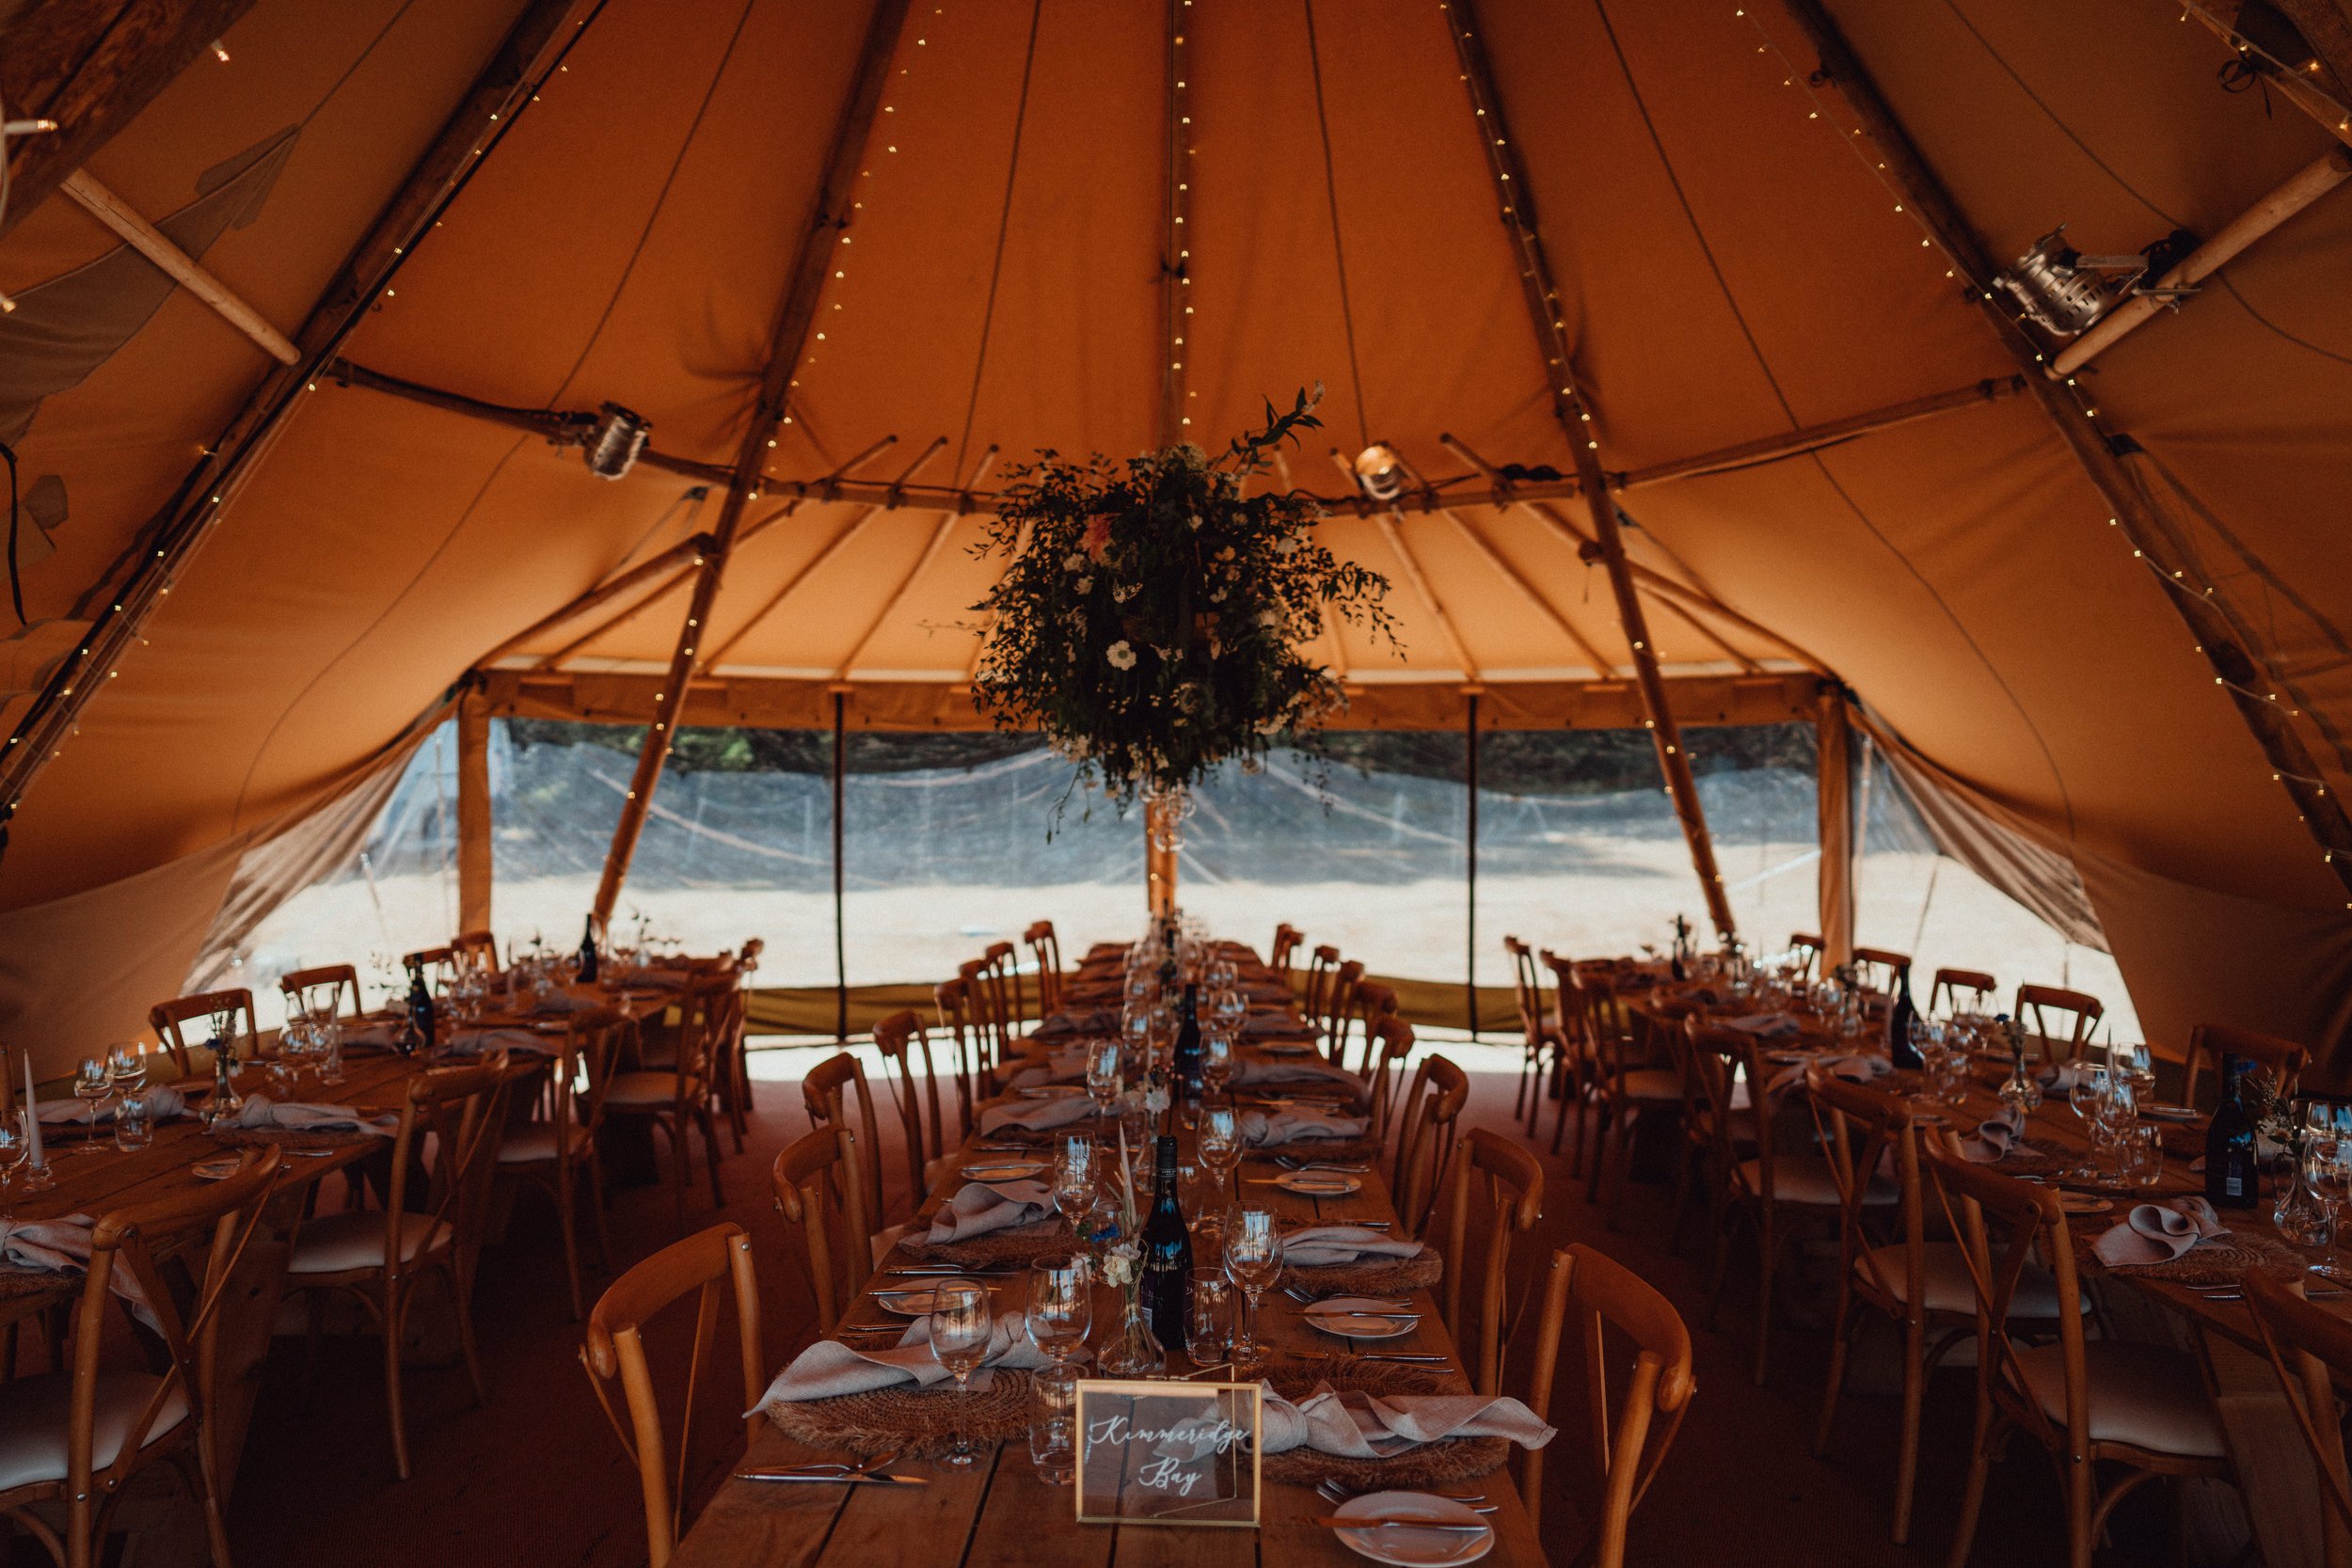 coastal-tents-tipi-teepee-marquee-hire-weddings-dorset-devon-hampshire-stratus-EmilyStevePhoto6.jpg